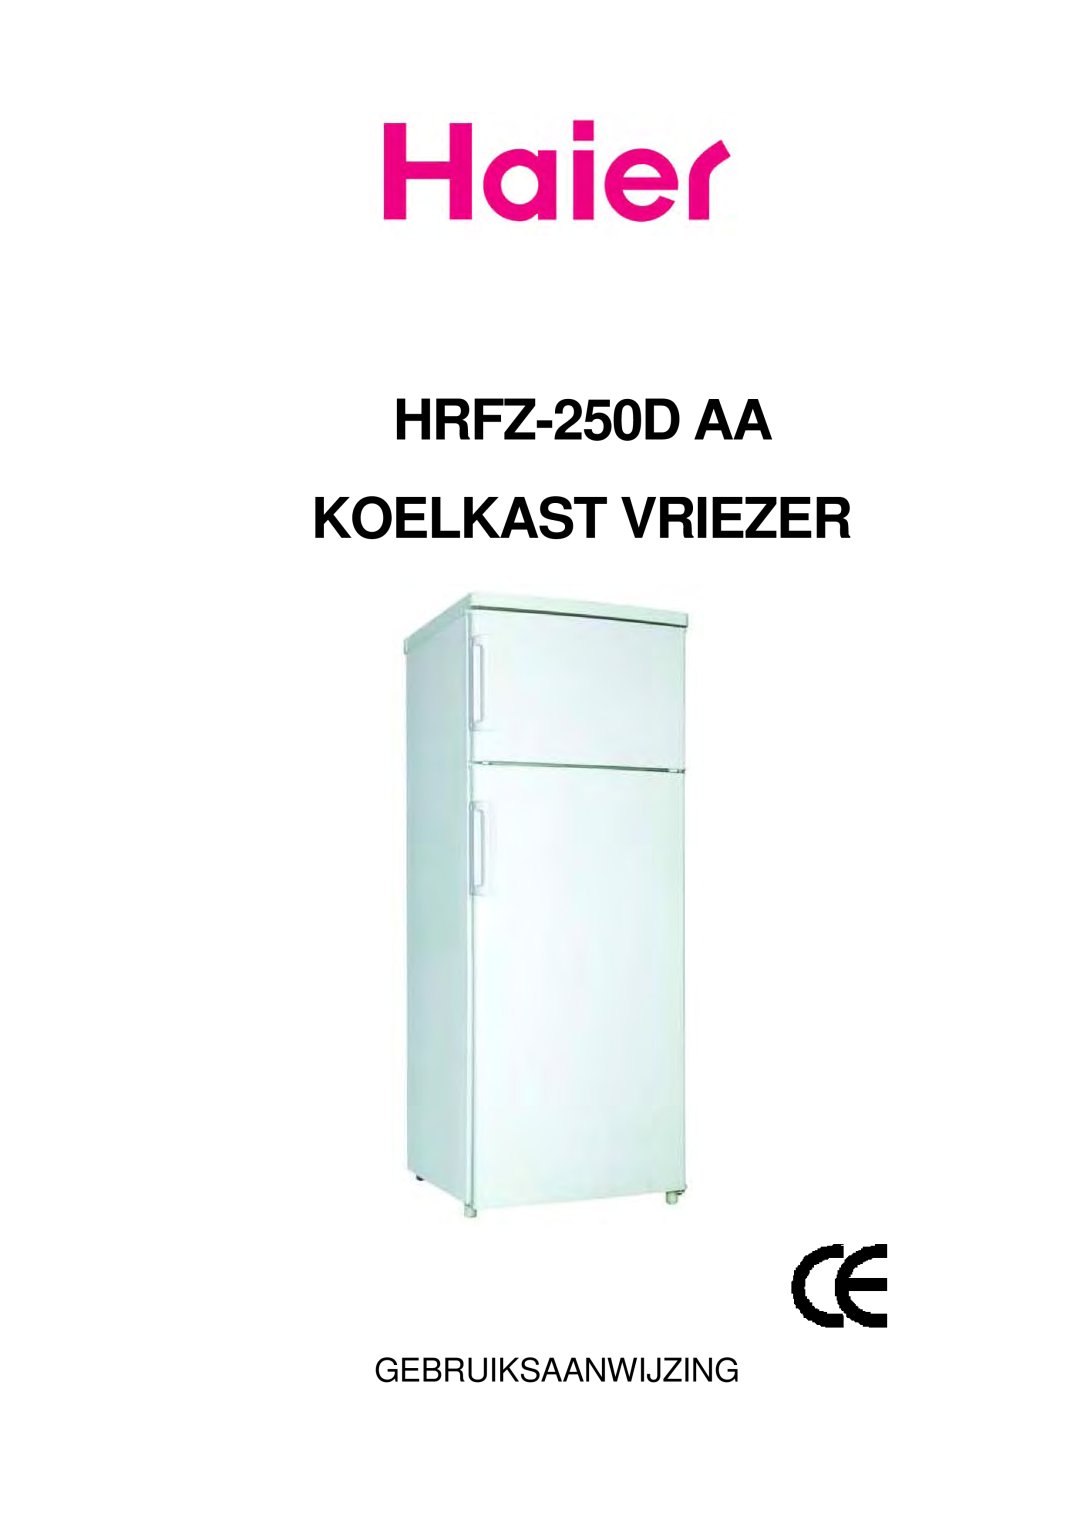 Haier HRFZ-250D AA manual HRFZ-250DAA KOELKAST VRIEZER, Gebruiksaanwijzing 